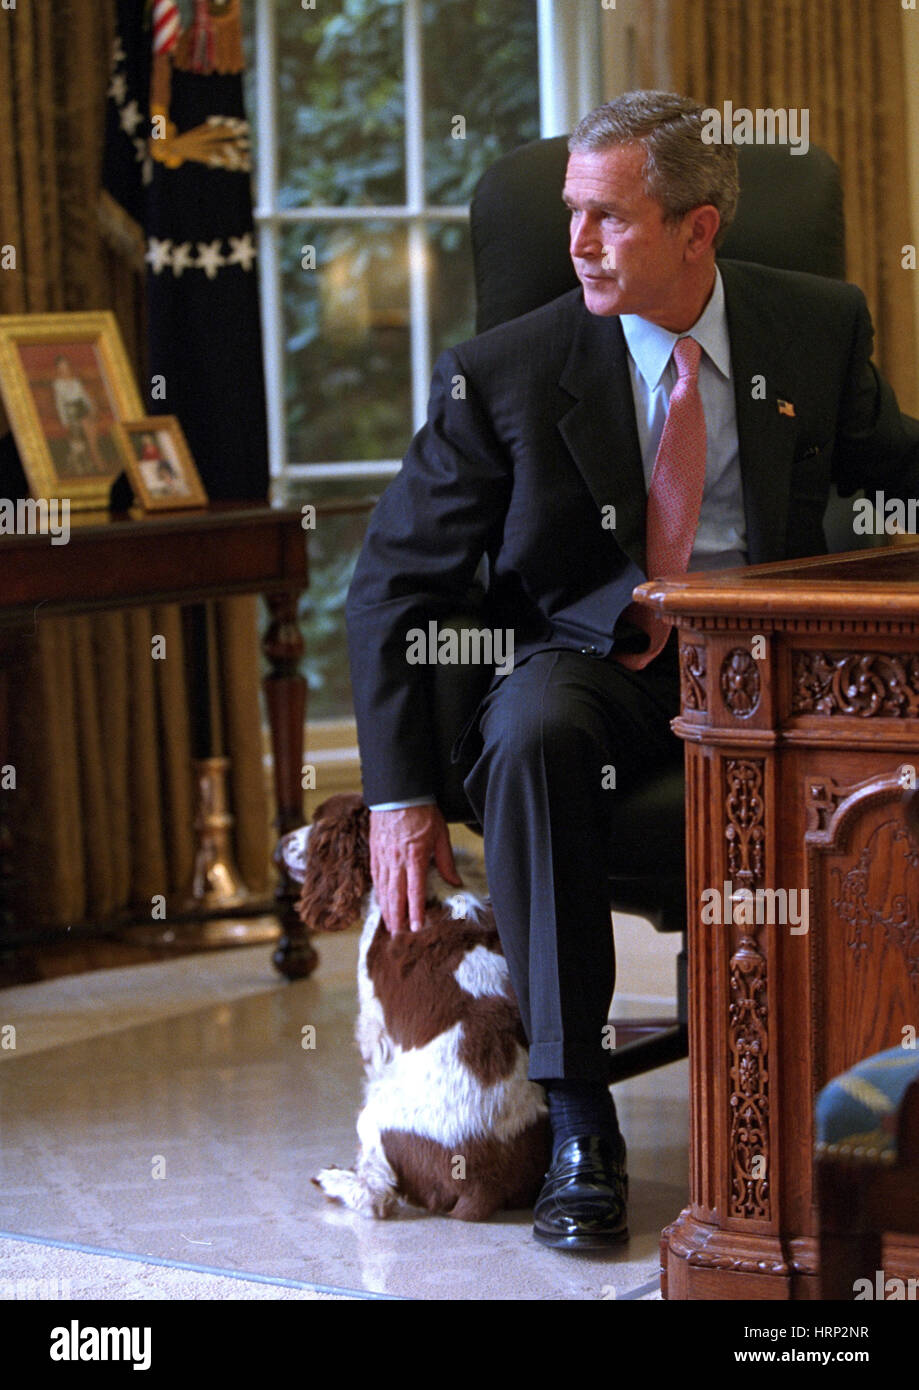 President Bush with Spotty, 2001 Stock Photo